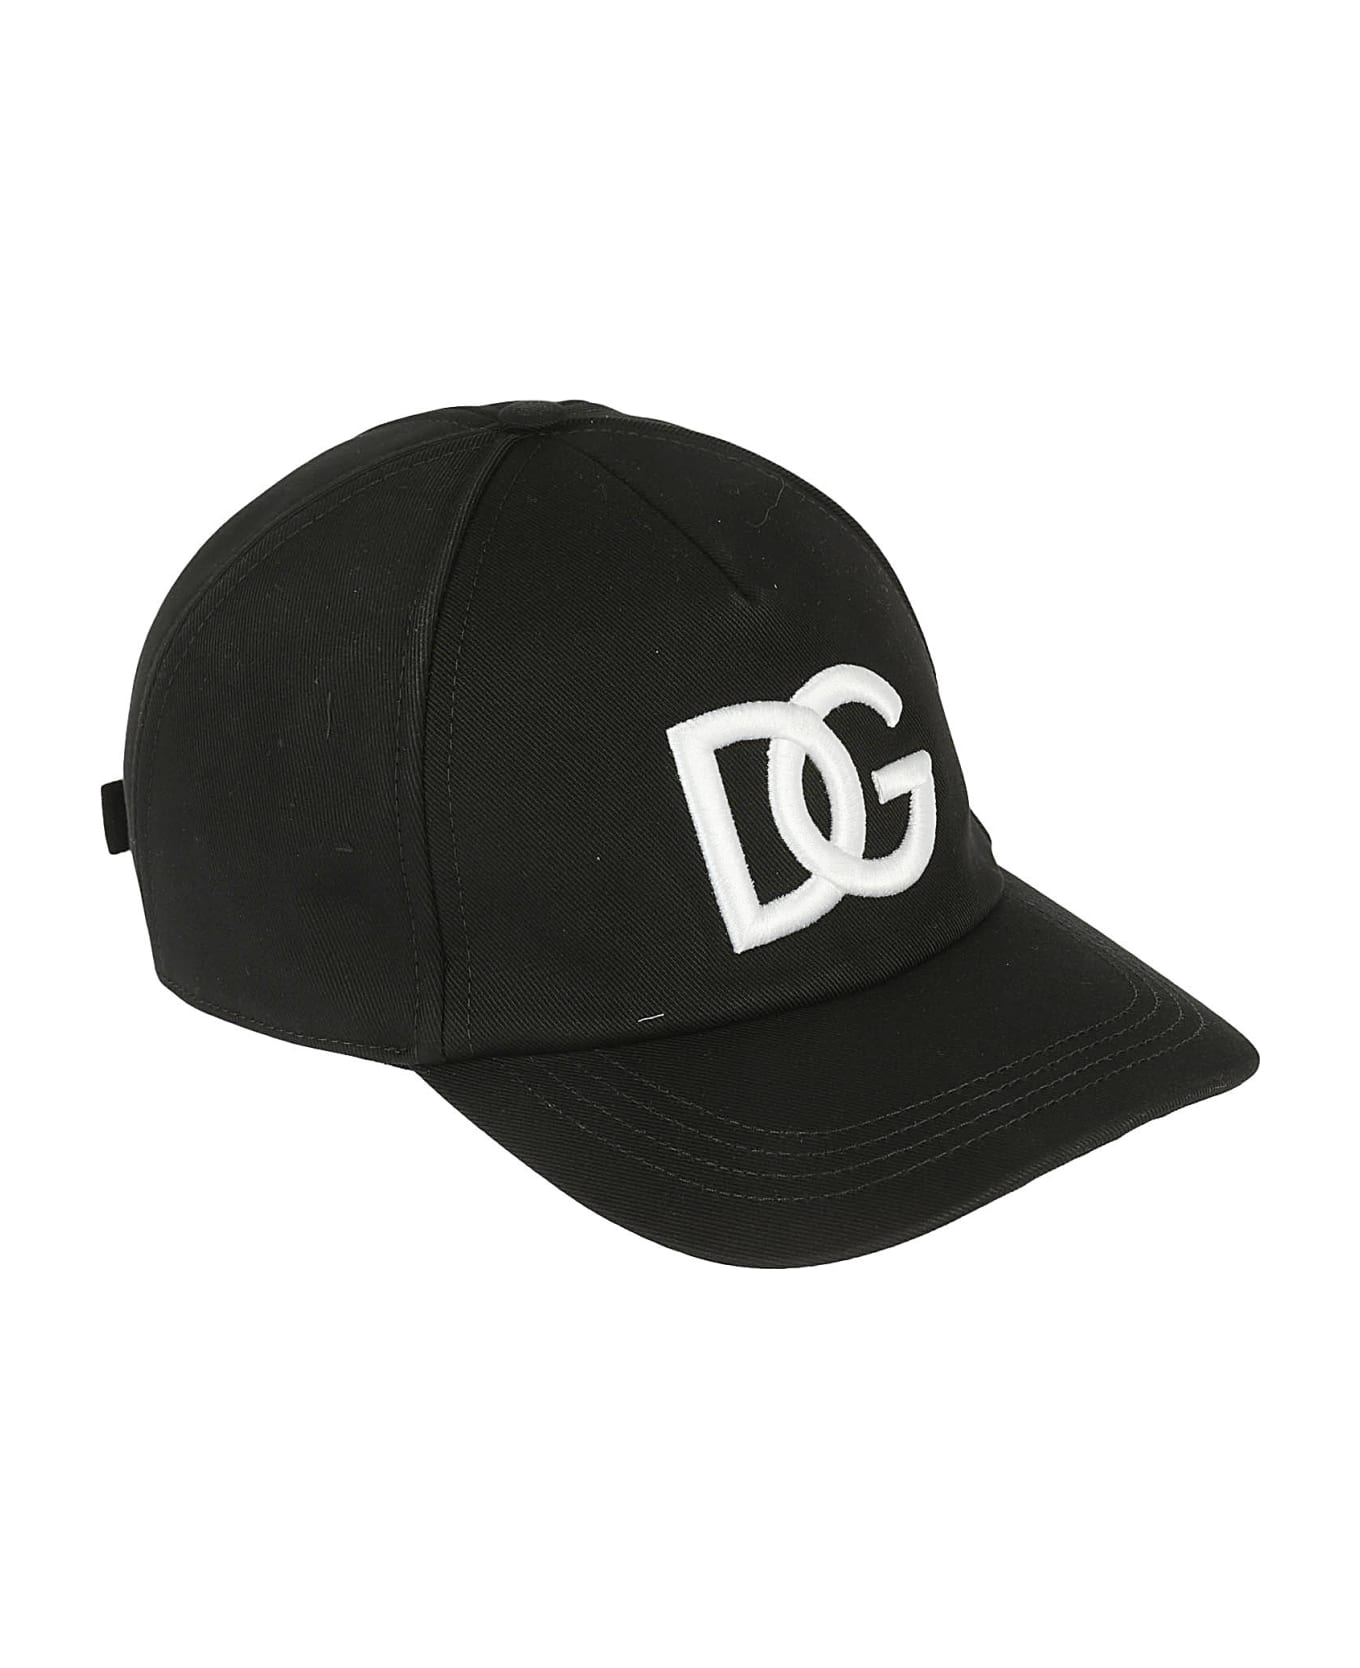 Dolce & Gabbana Logo Embroidered Cap - Black